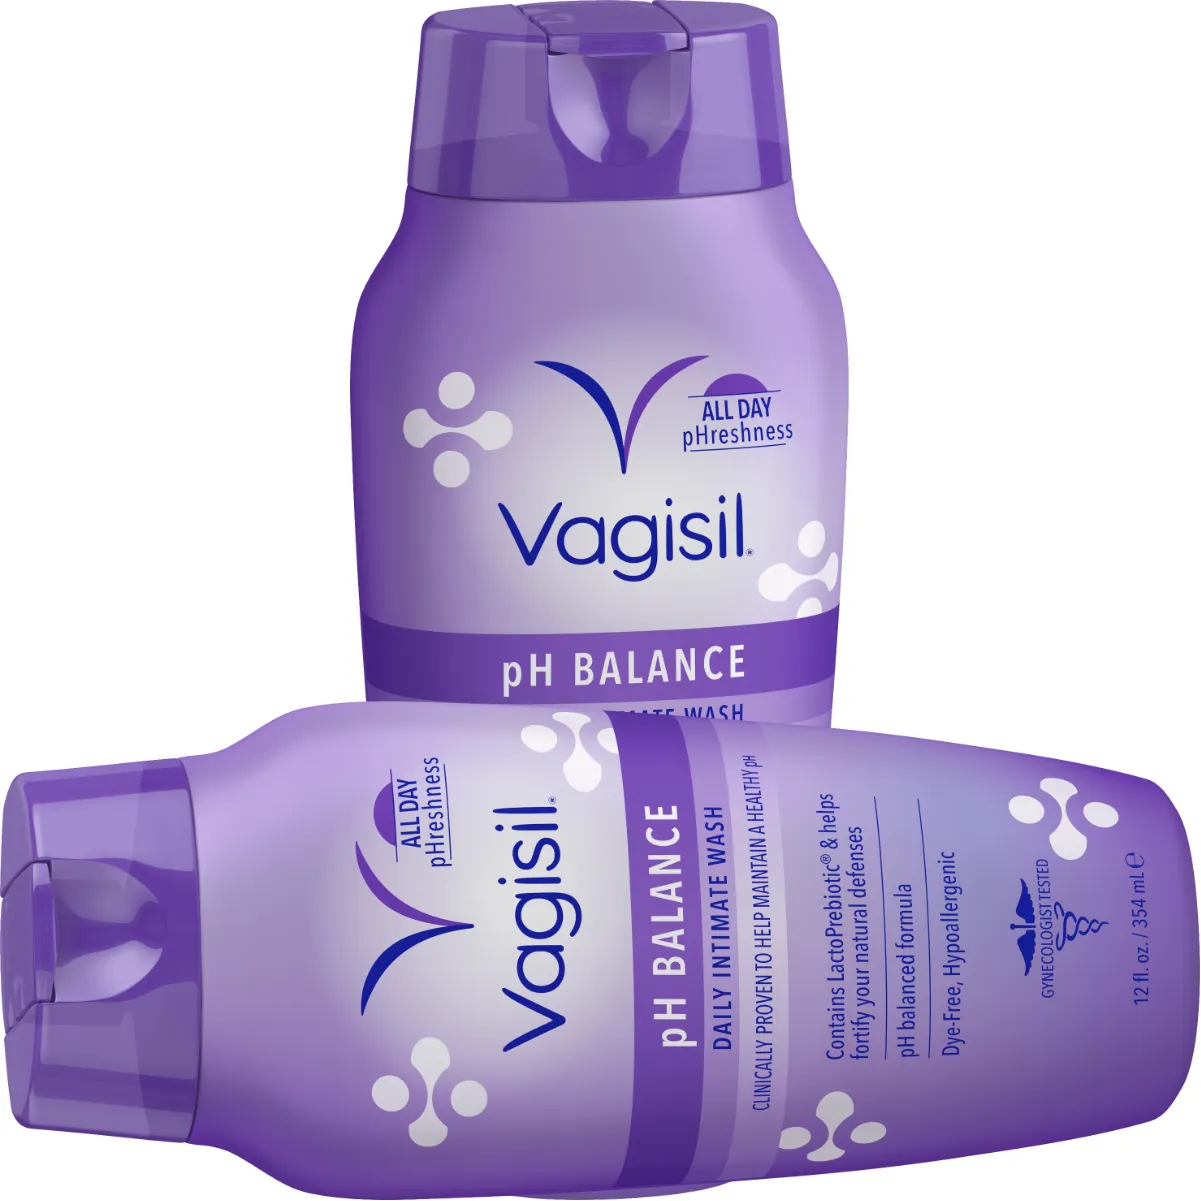 Free Vagisil Feminine Hygiene Products